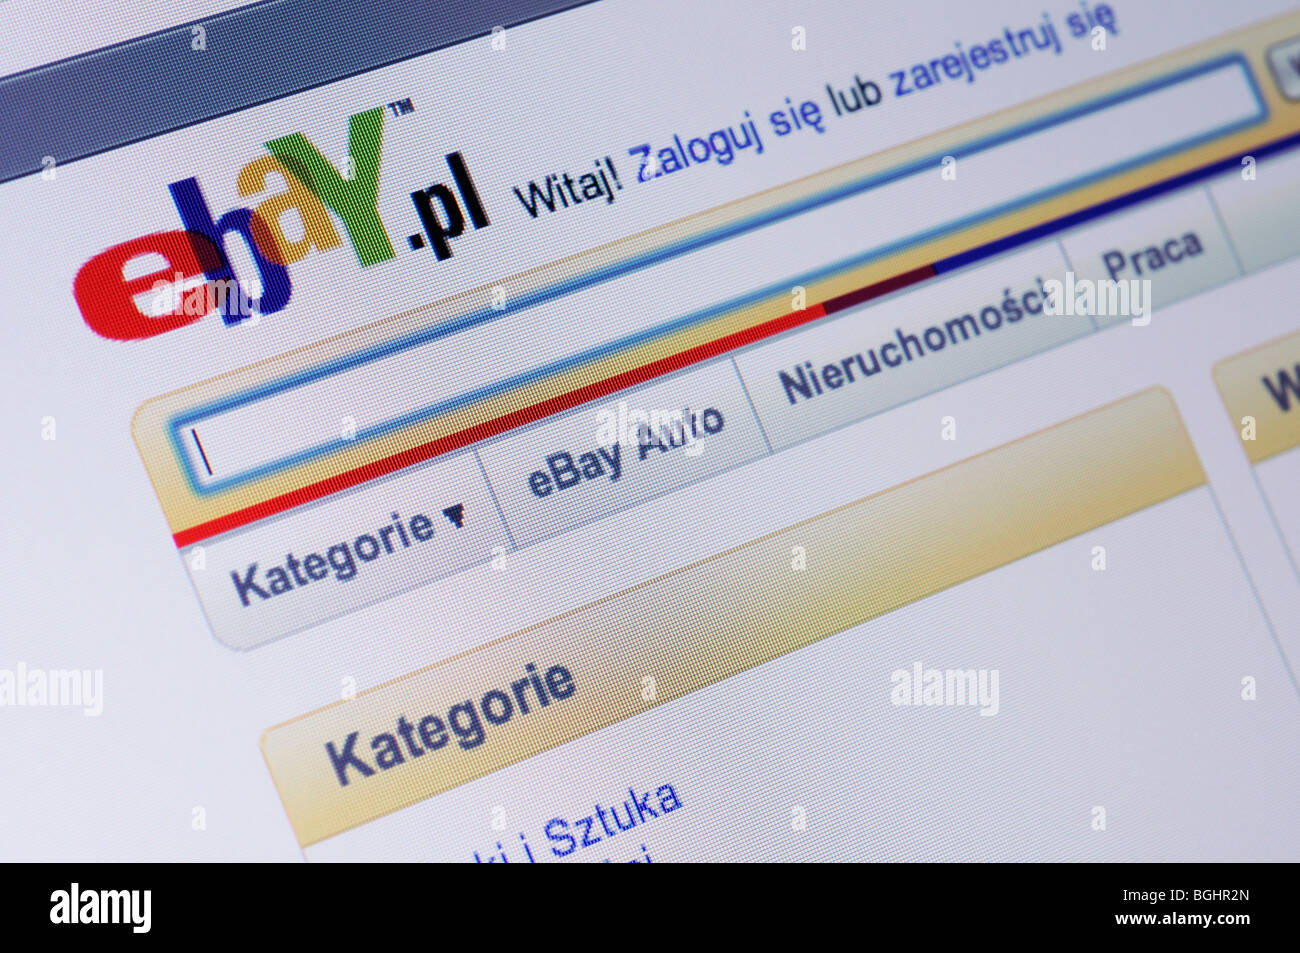 Ebay website - Polish Stock Photo